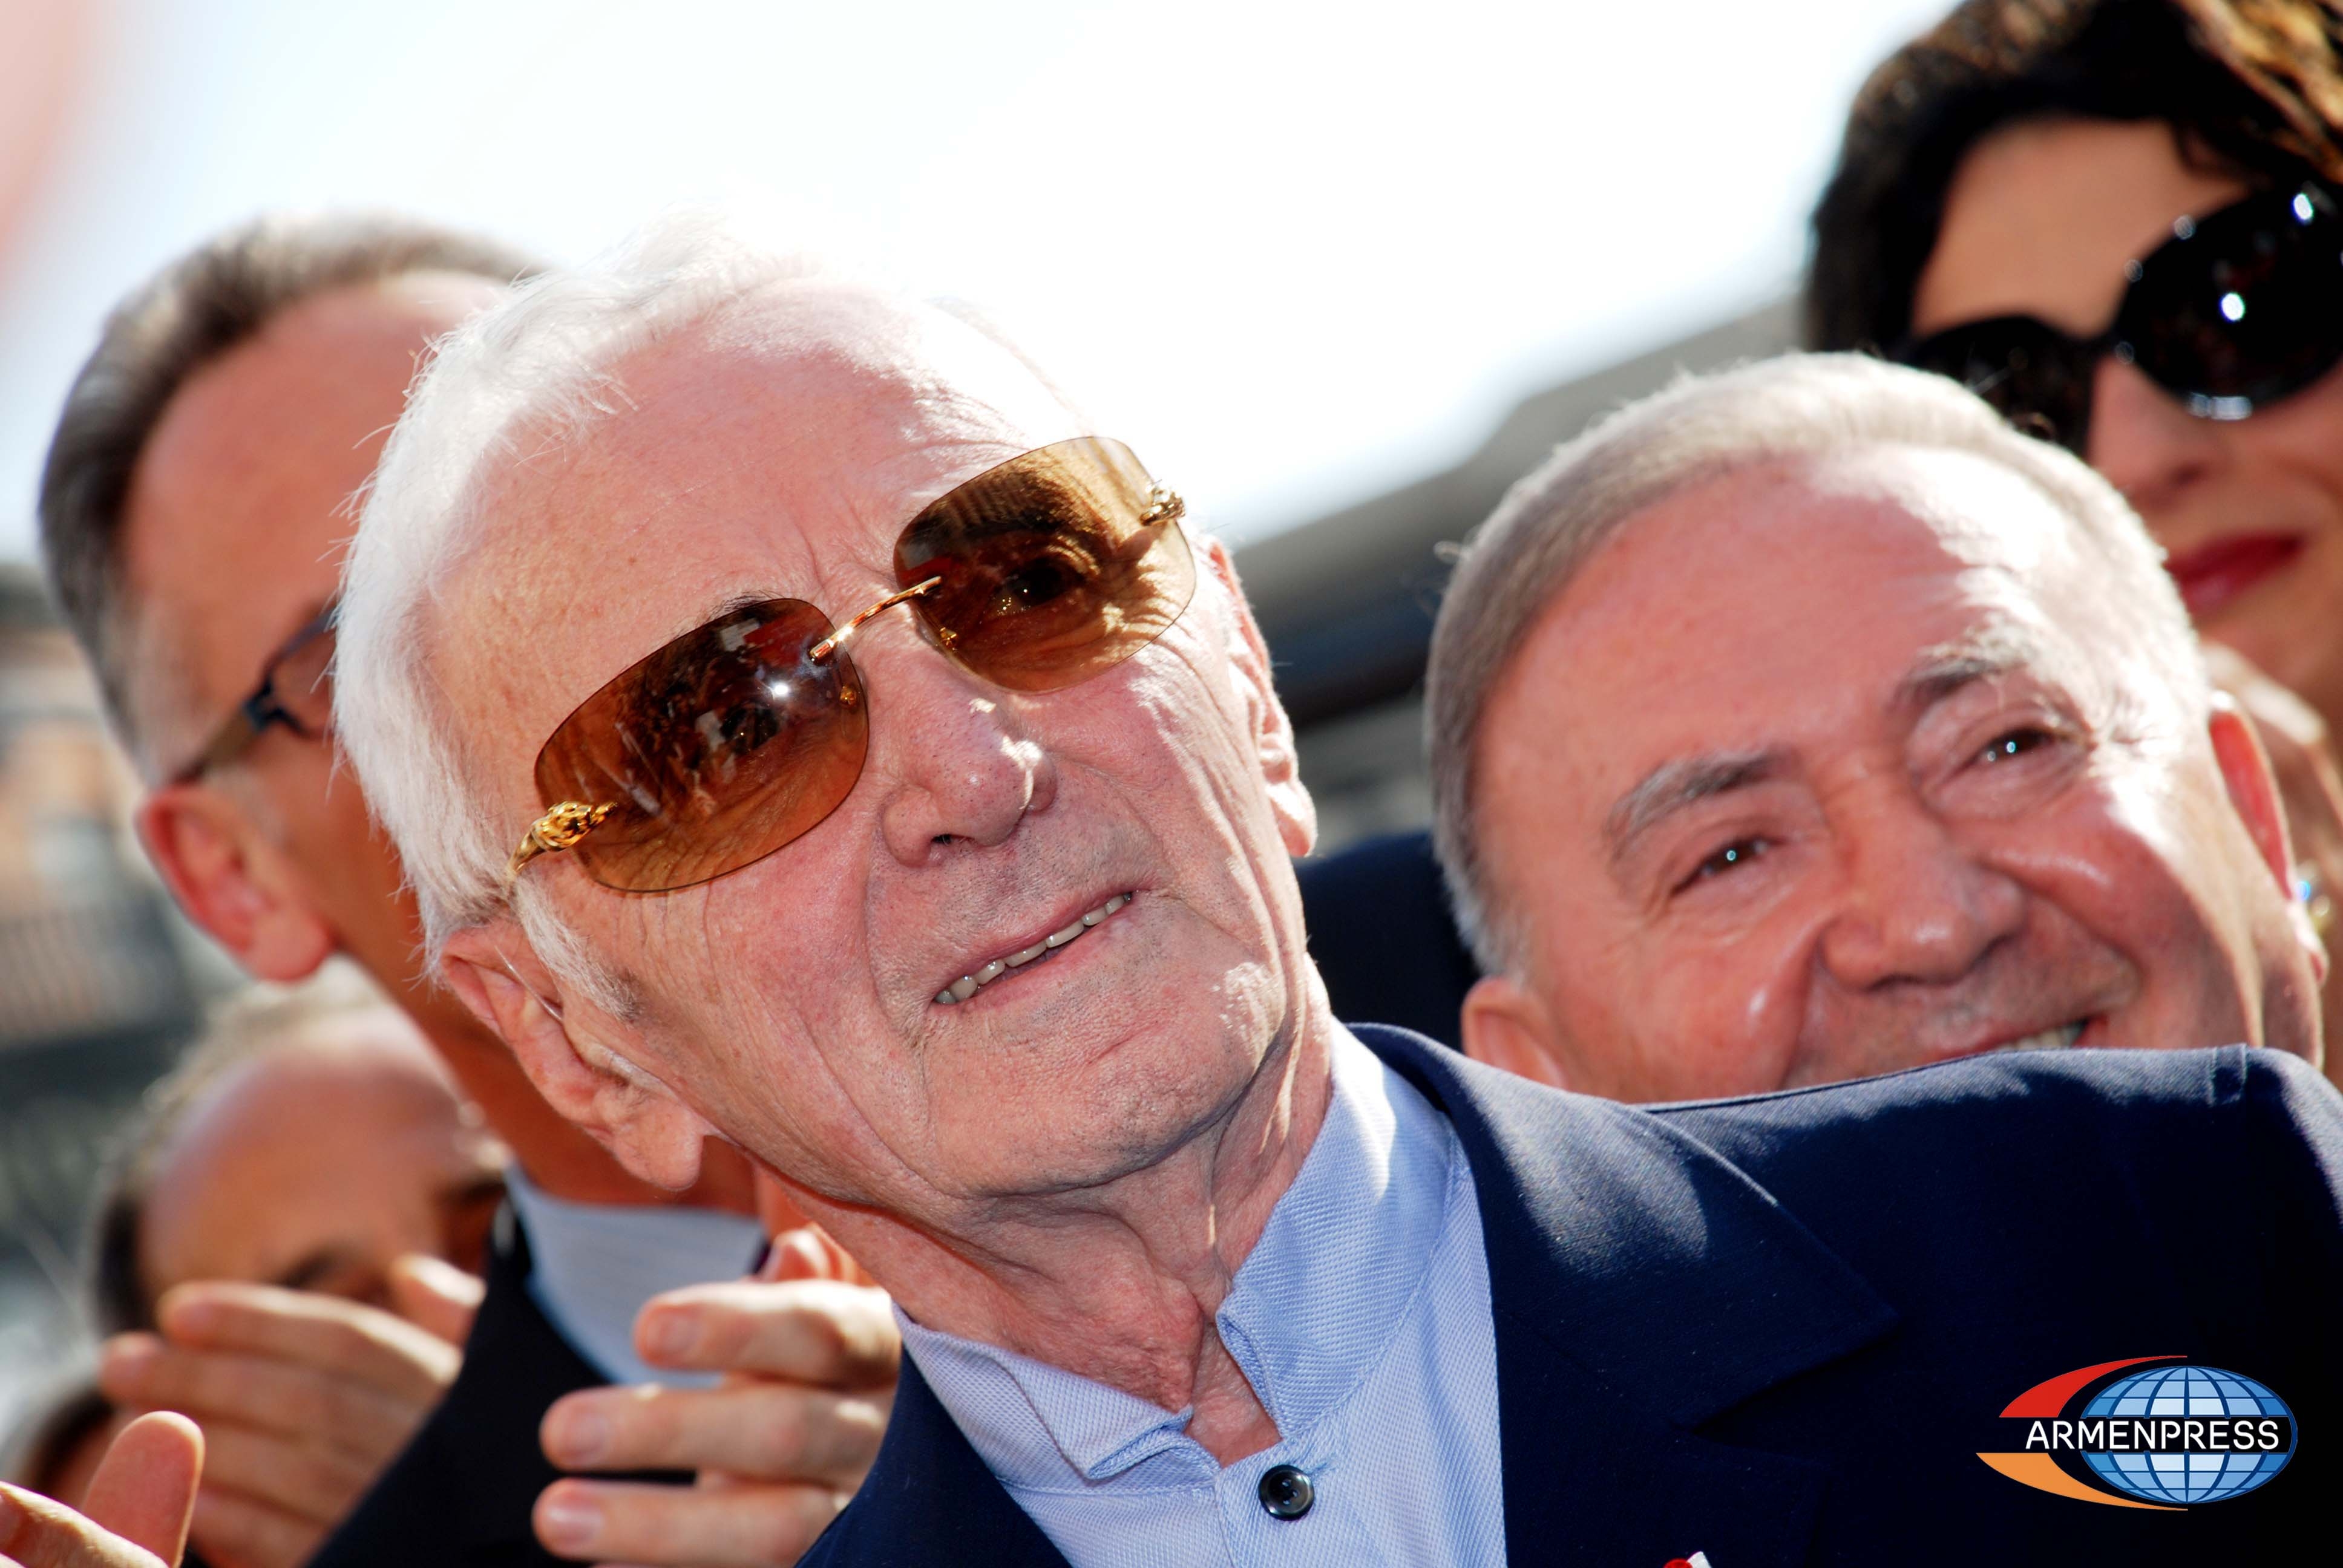 Toronto to present performance devoted to Aznavour
